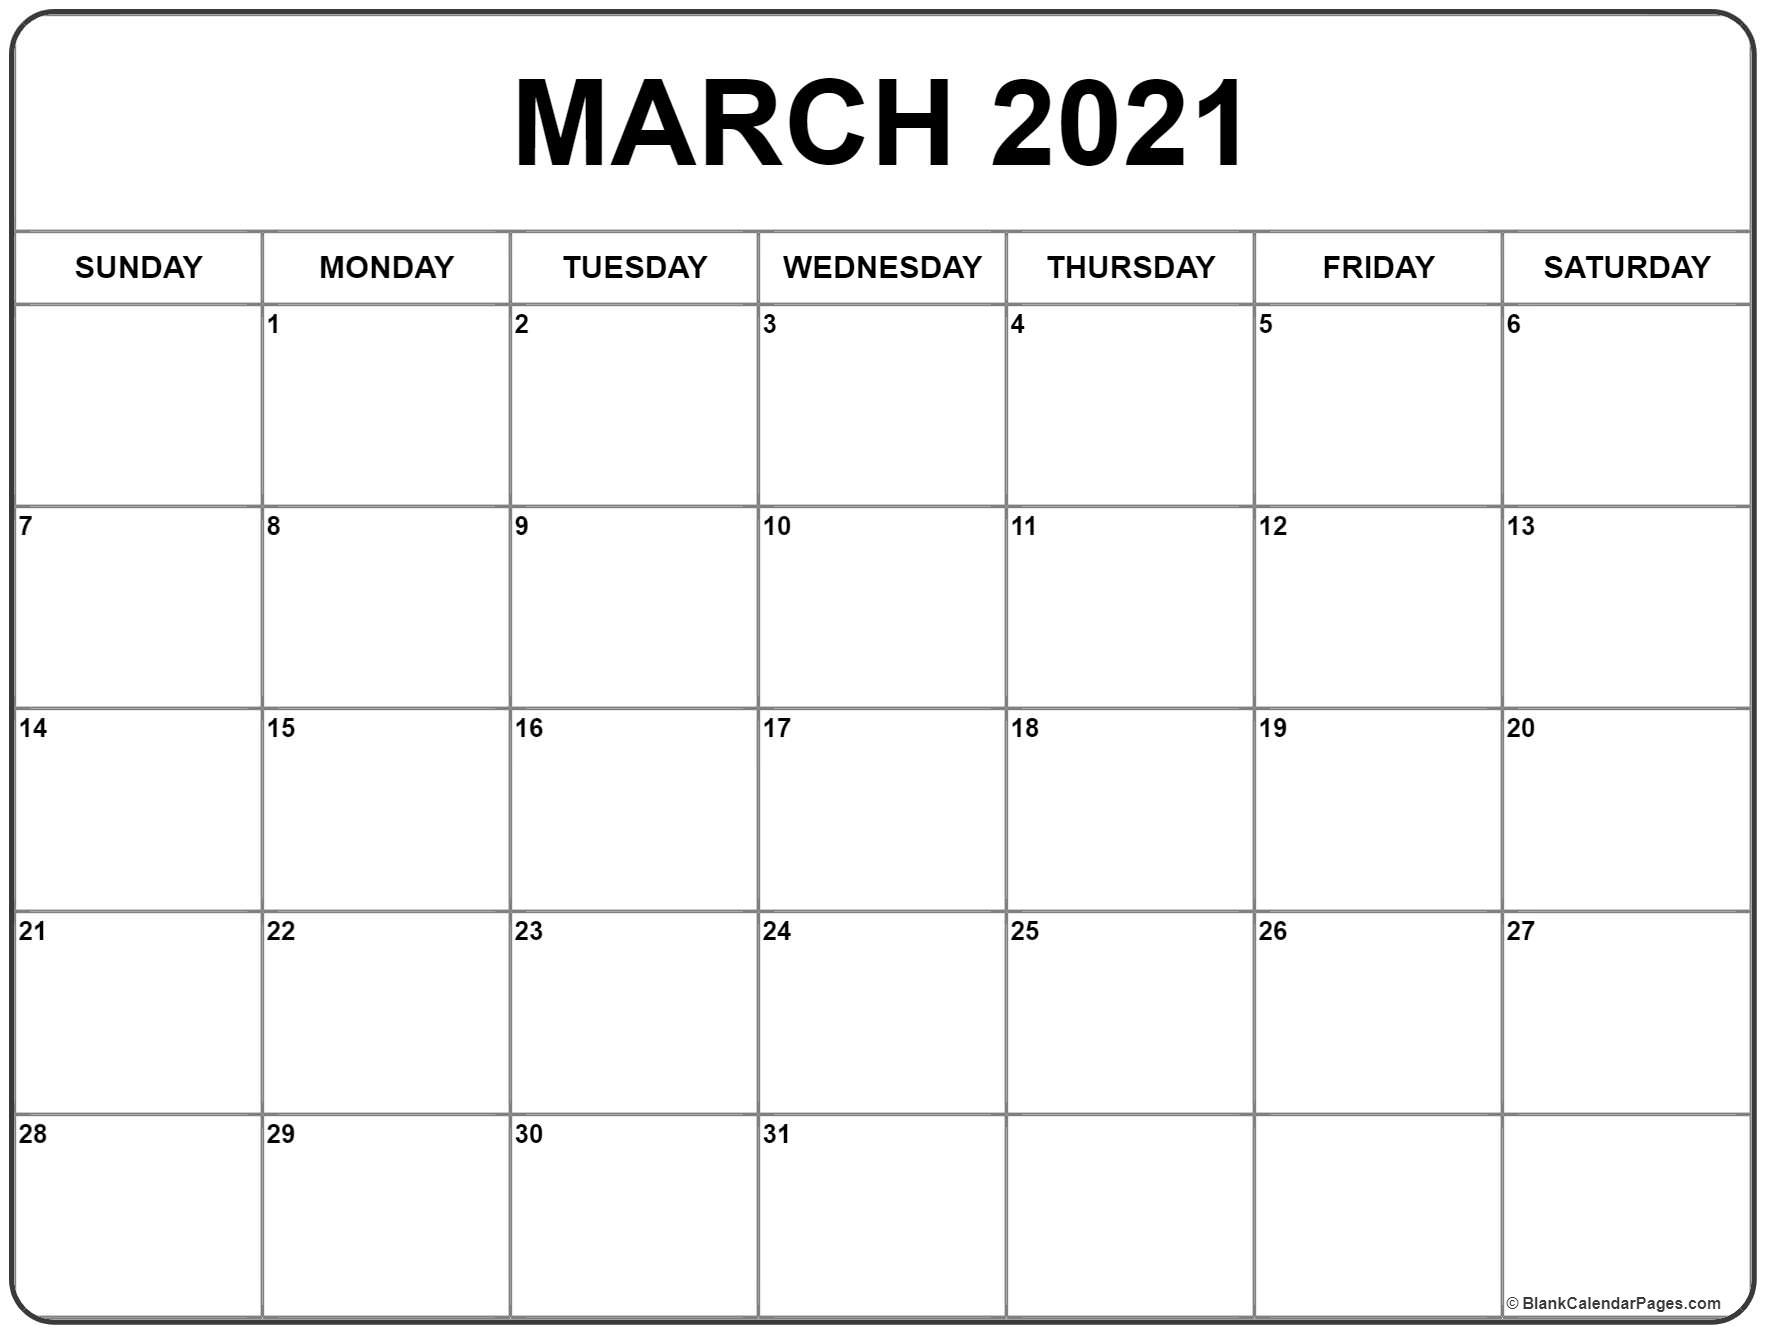 CAL=March 2021 calendar